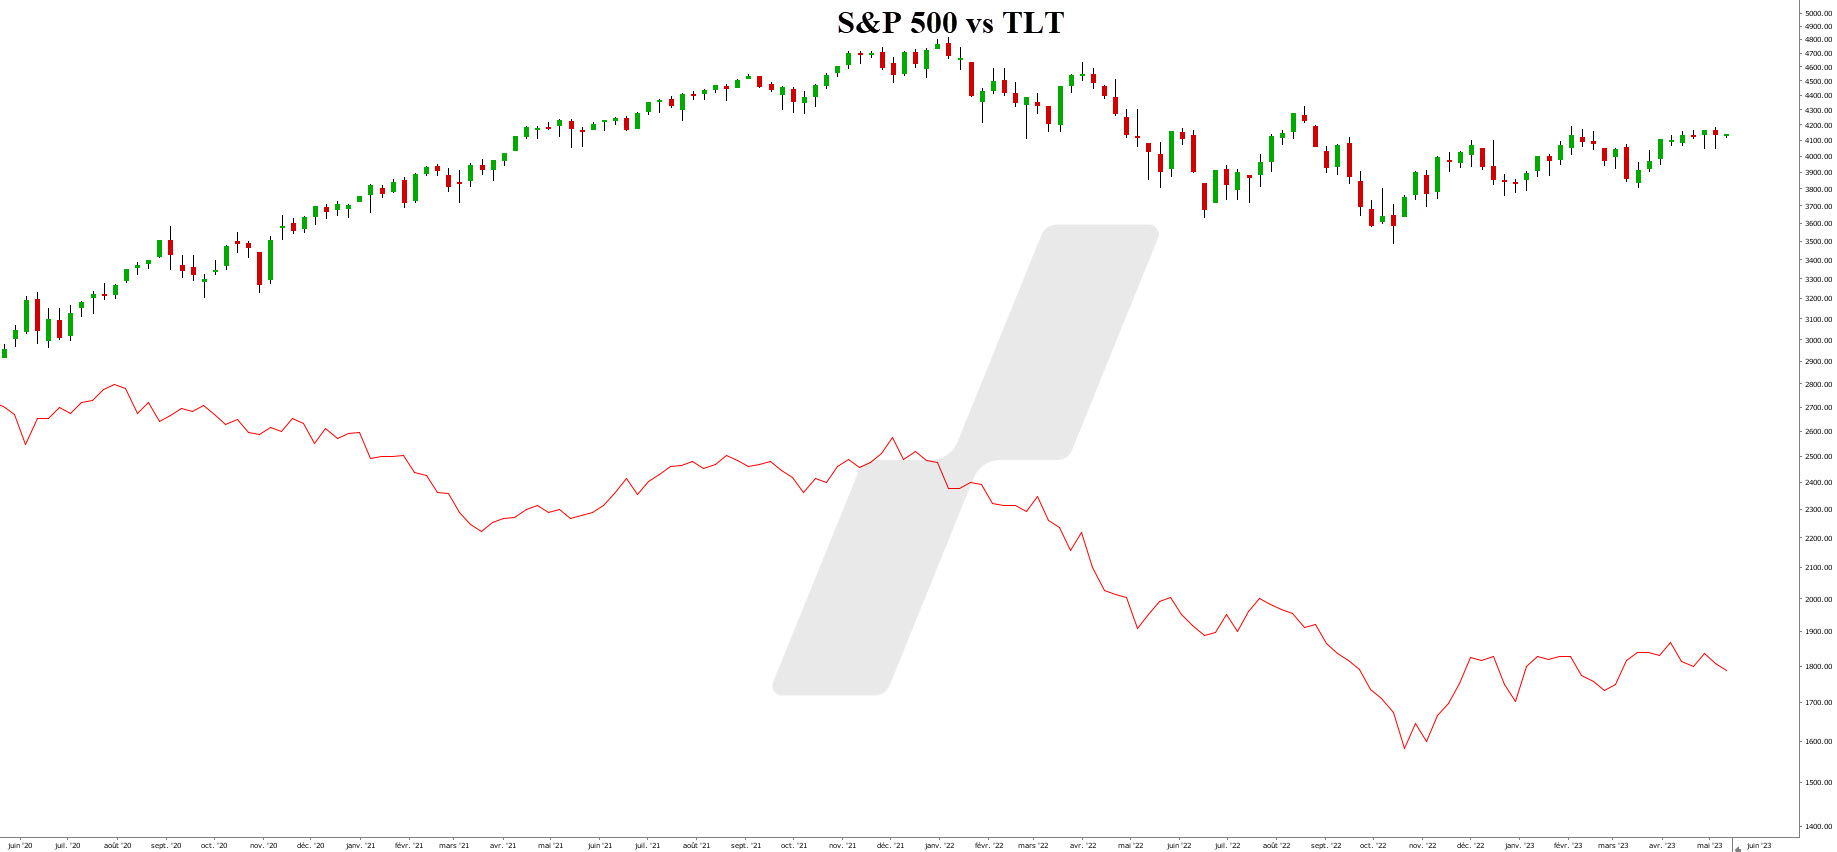 S&P 500 vs TLT weekly